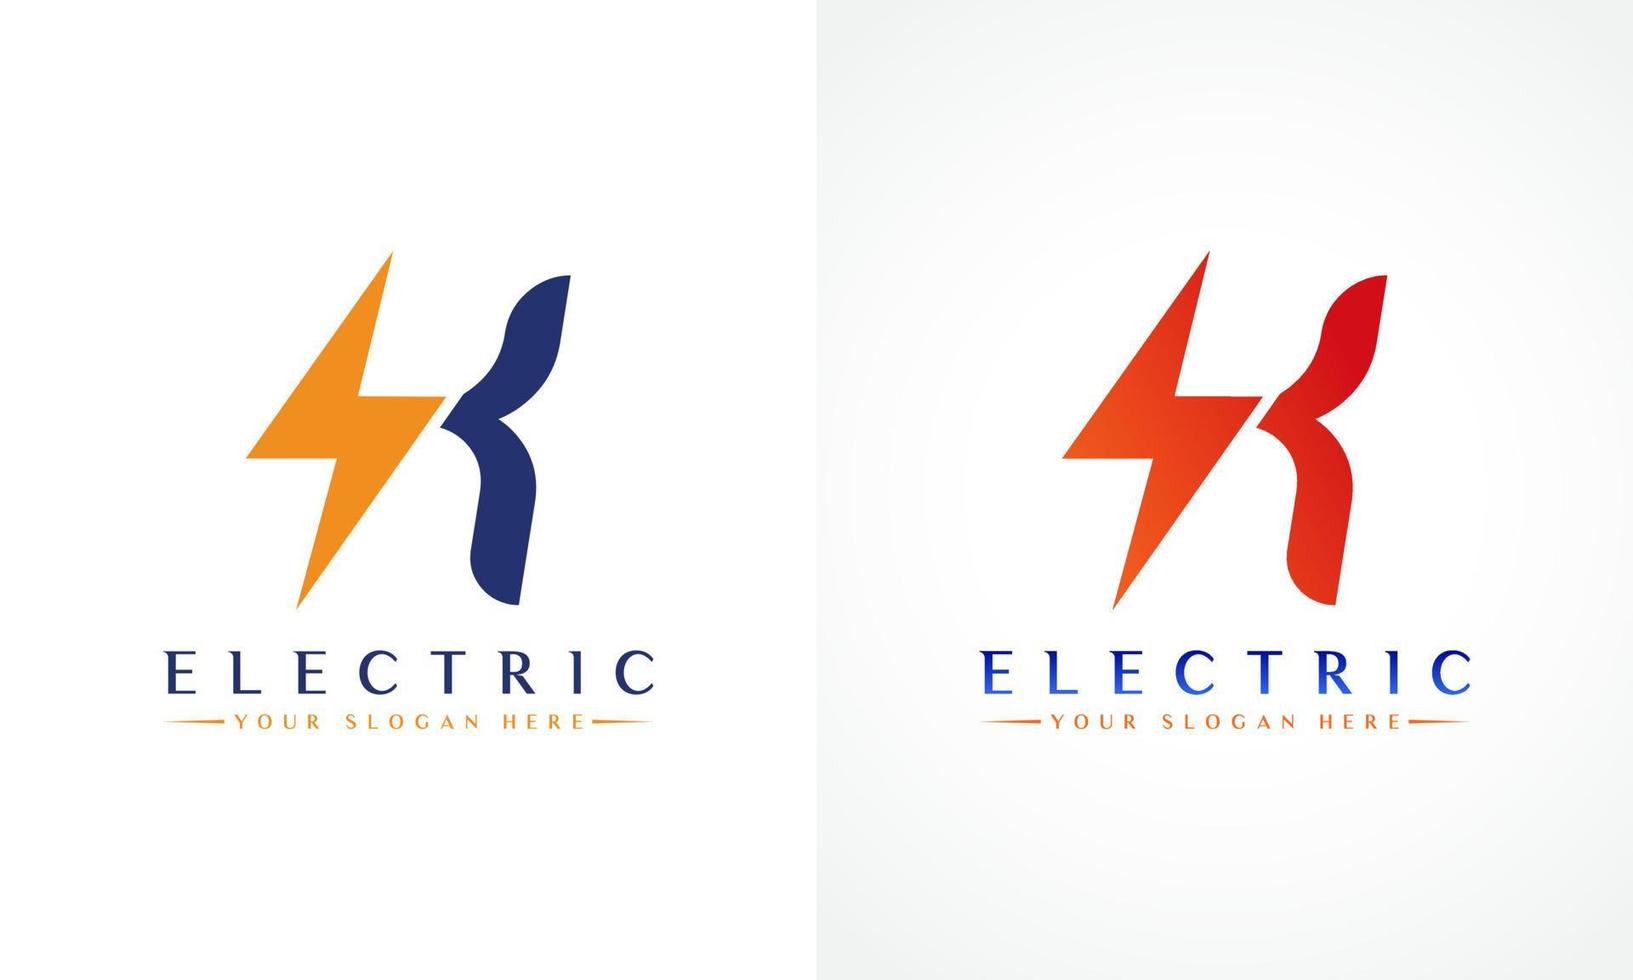 K Letter Logo With Lightning Thunder Bolt Vector Design. Electric Bolt Letter K Logo Vector Illustration.